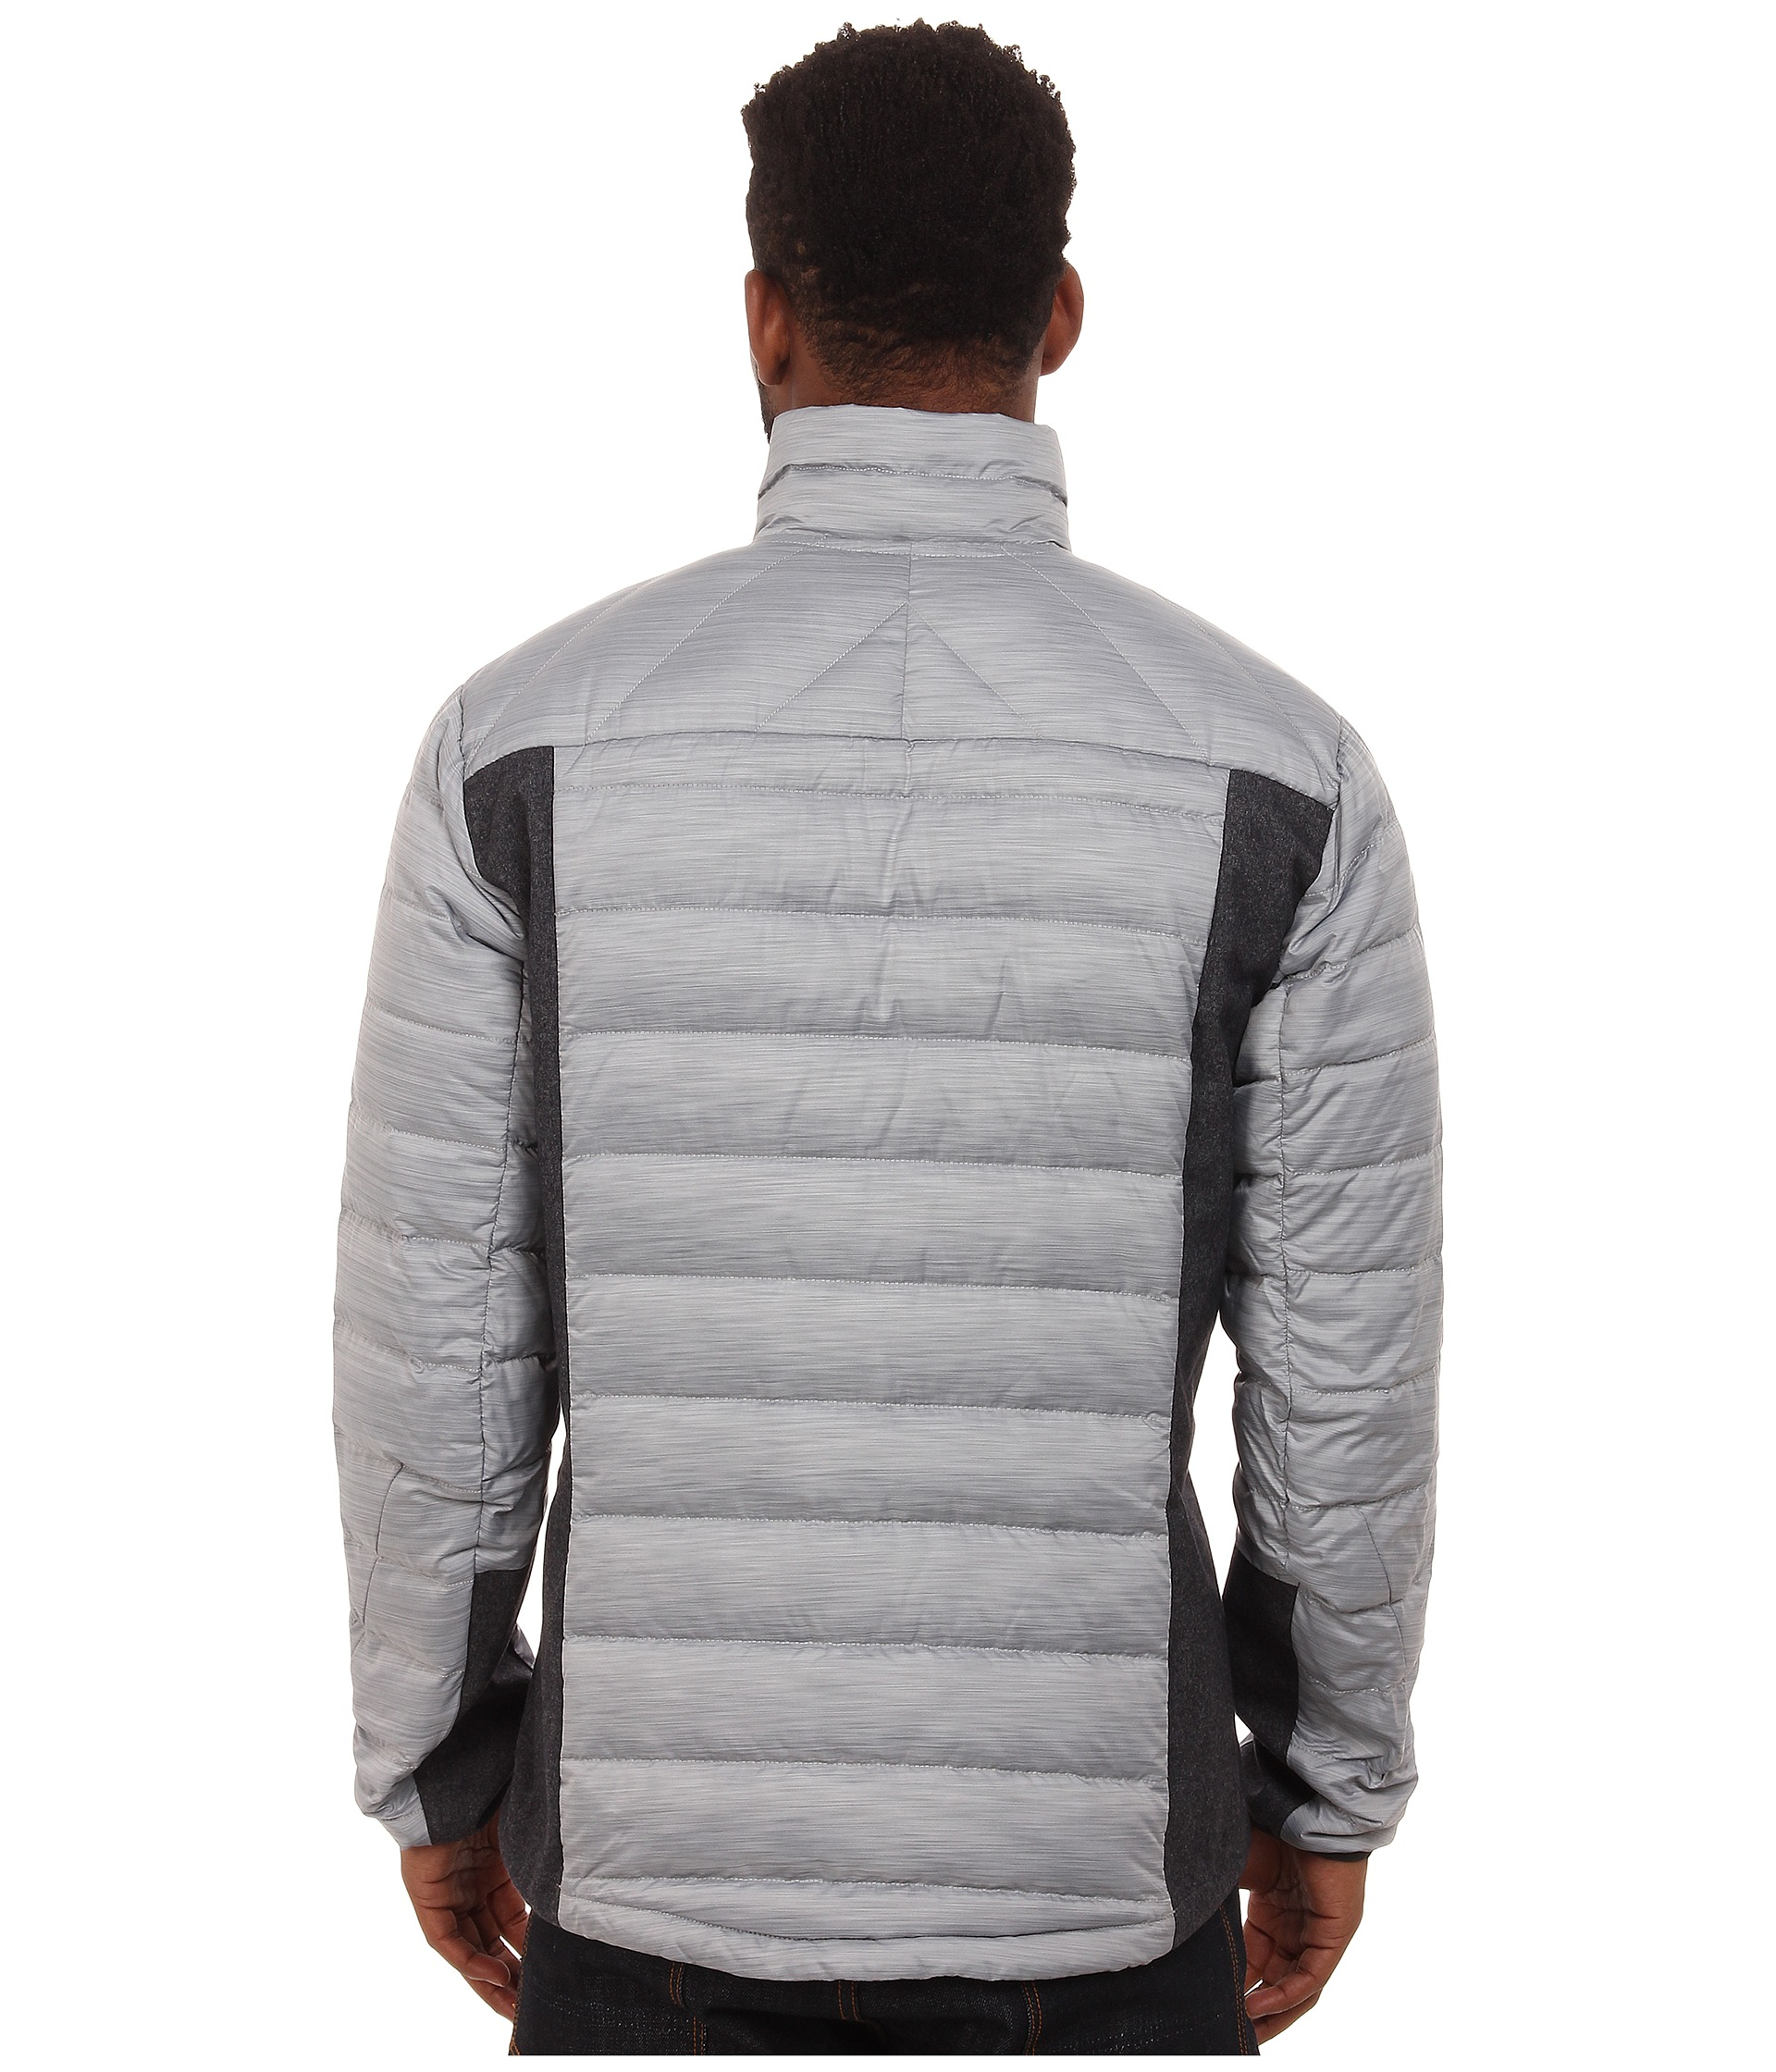 Lyst - Adidas Alpherr Hybrid Jacket in Gray for Men